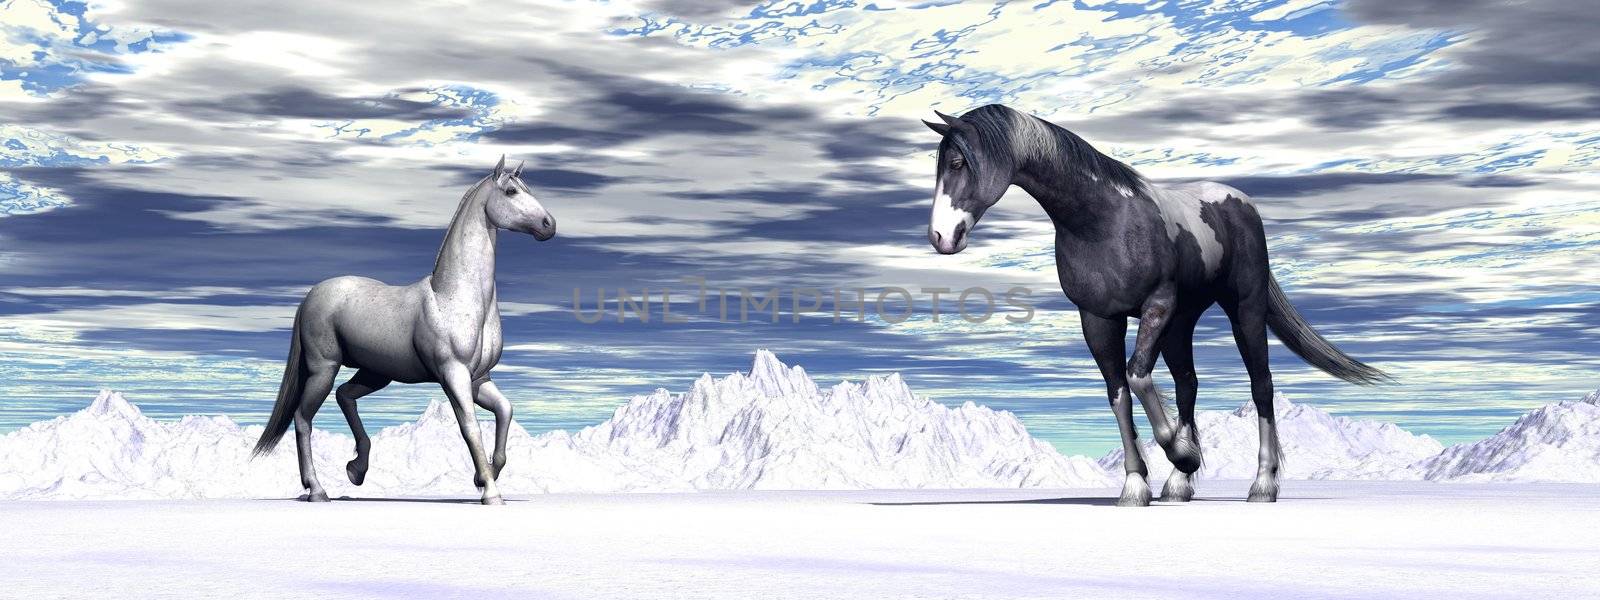 Couple of horses - 3D render by Elenaphotos21